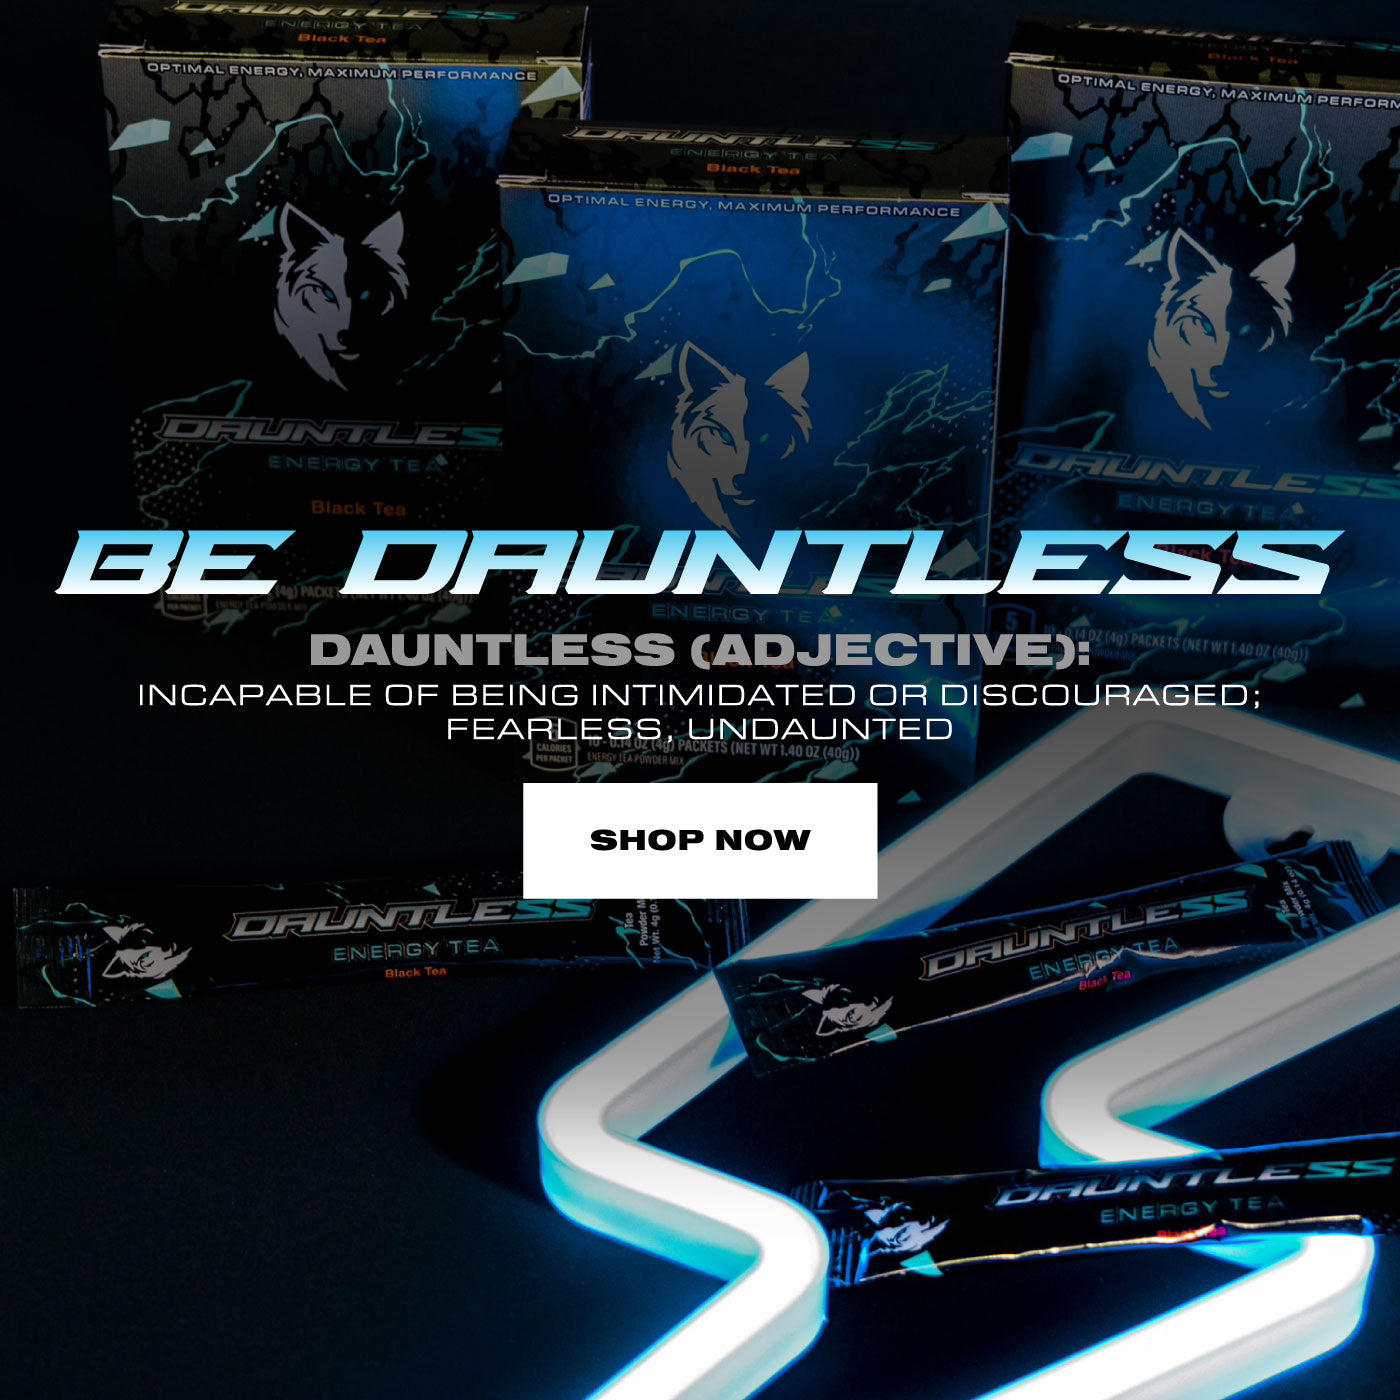 Dauntless Energy Tea